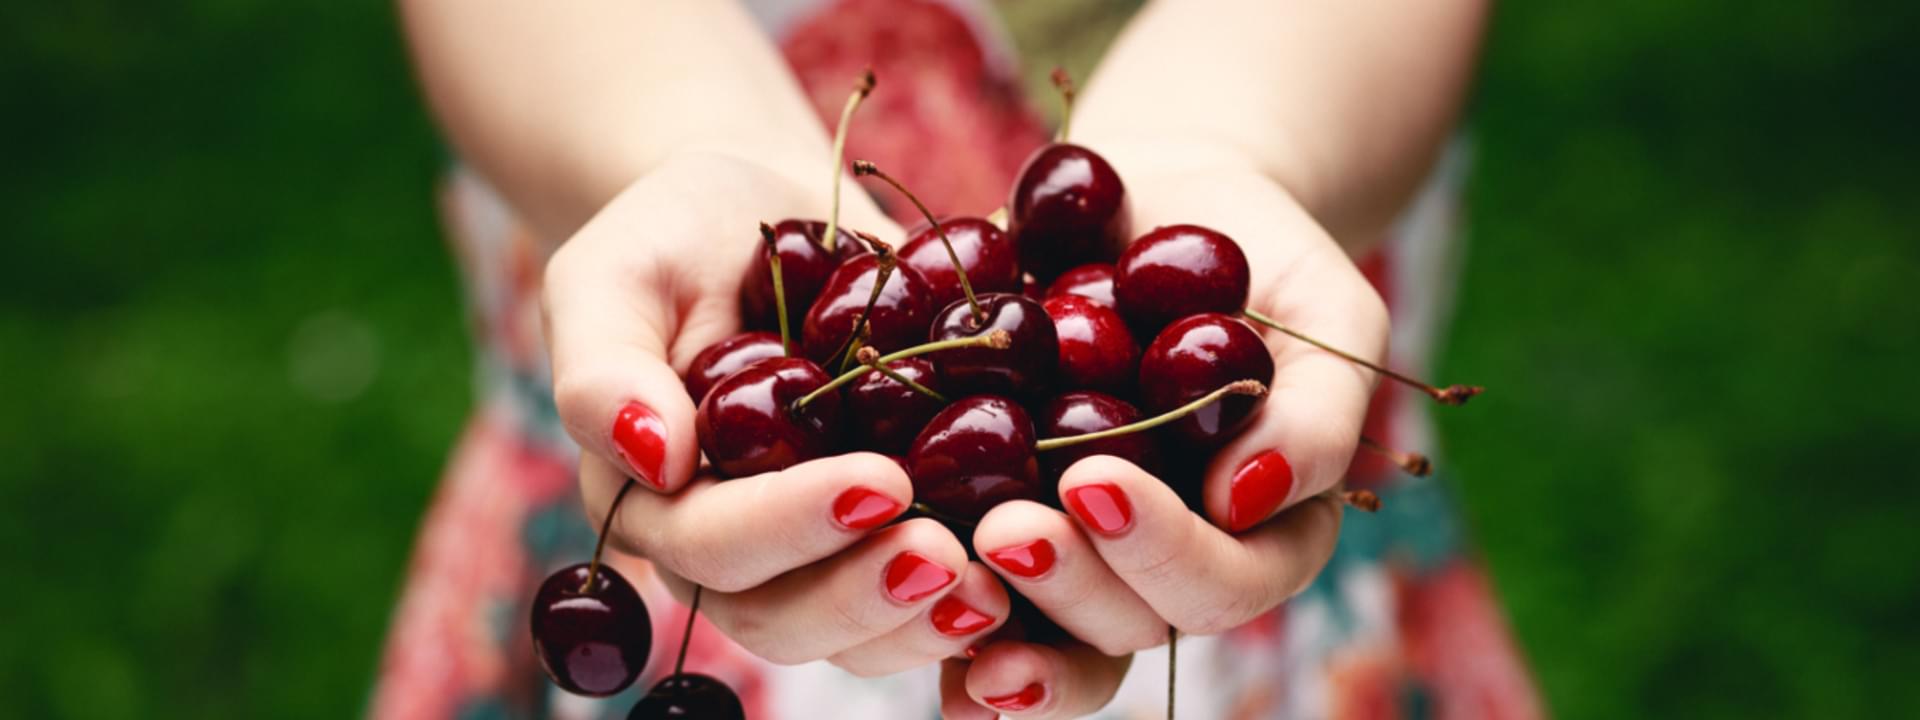 Cherry of Fundão